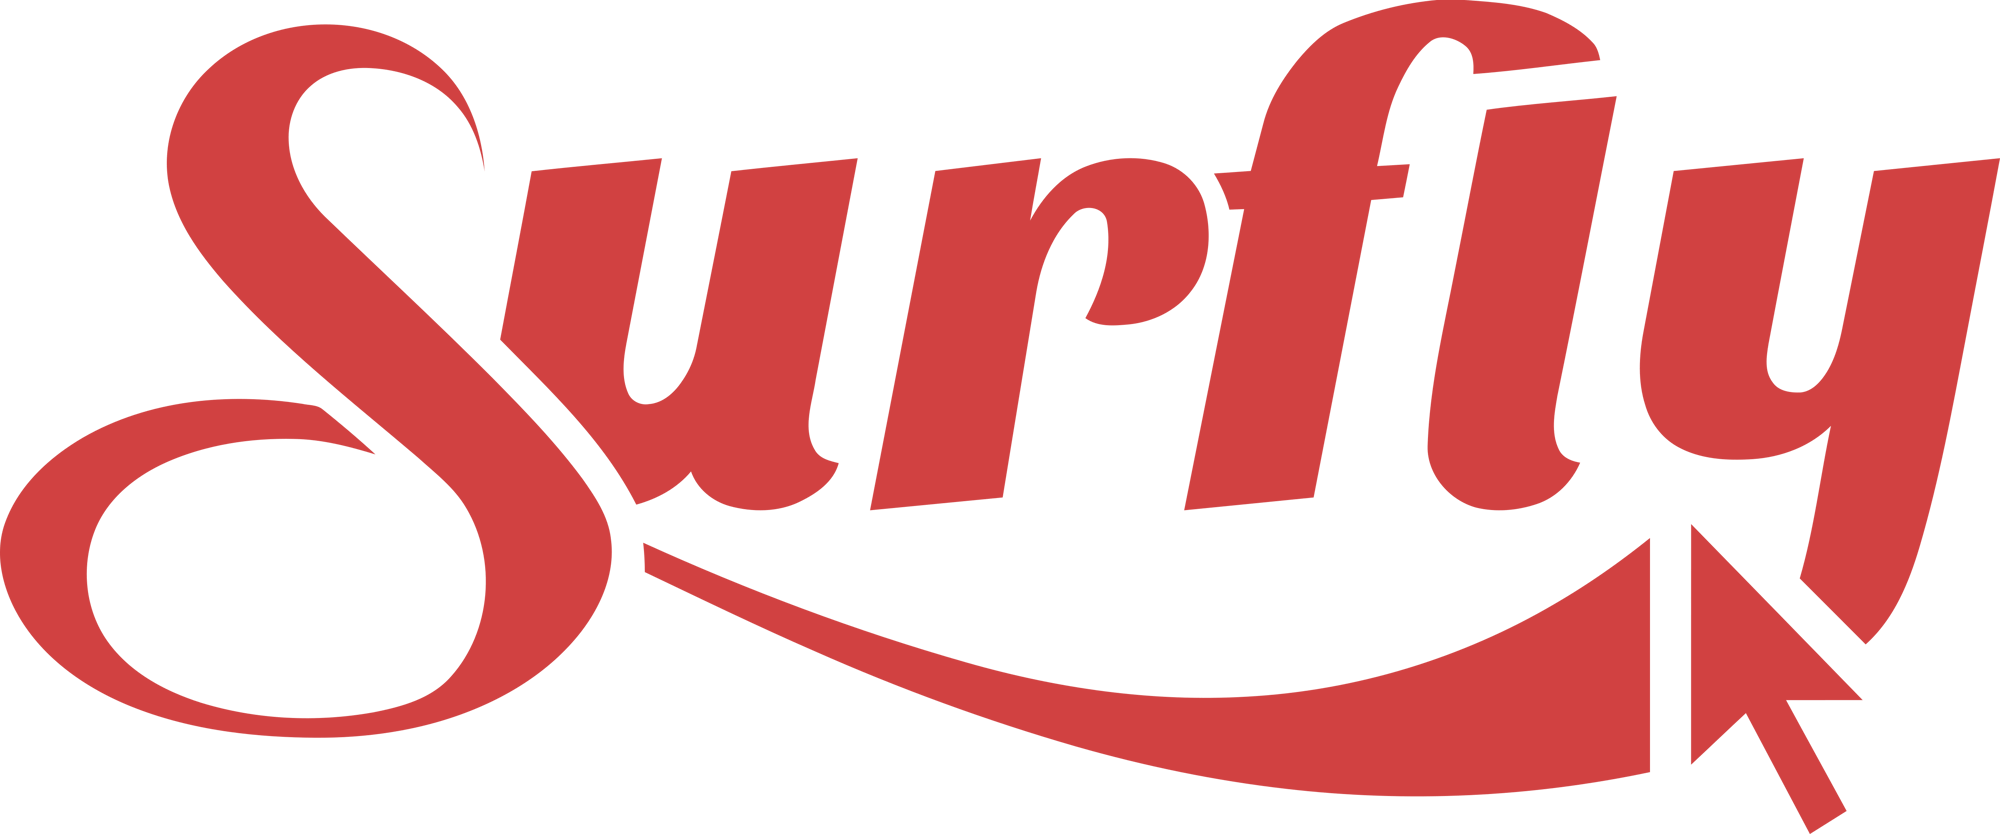 Surfly_Logo